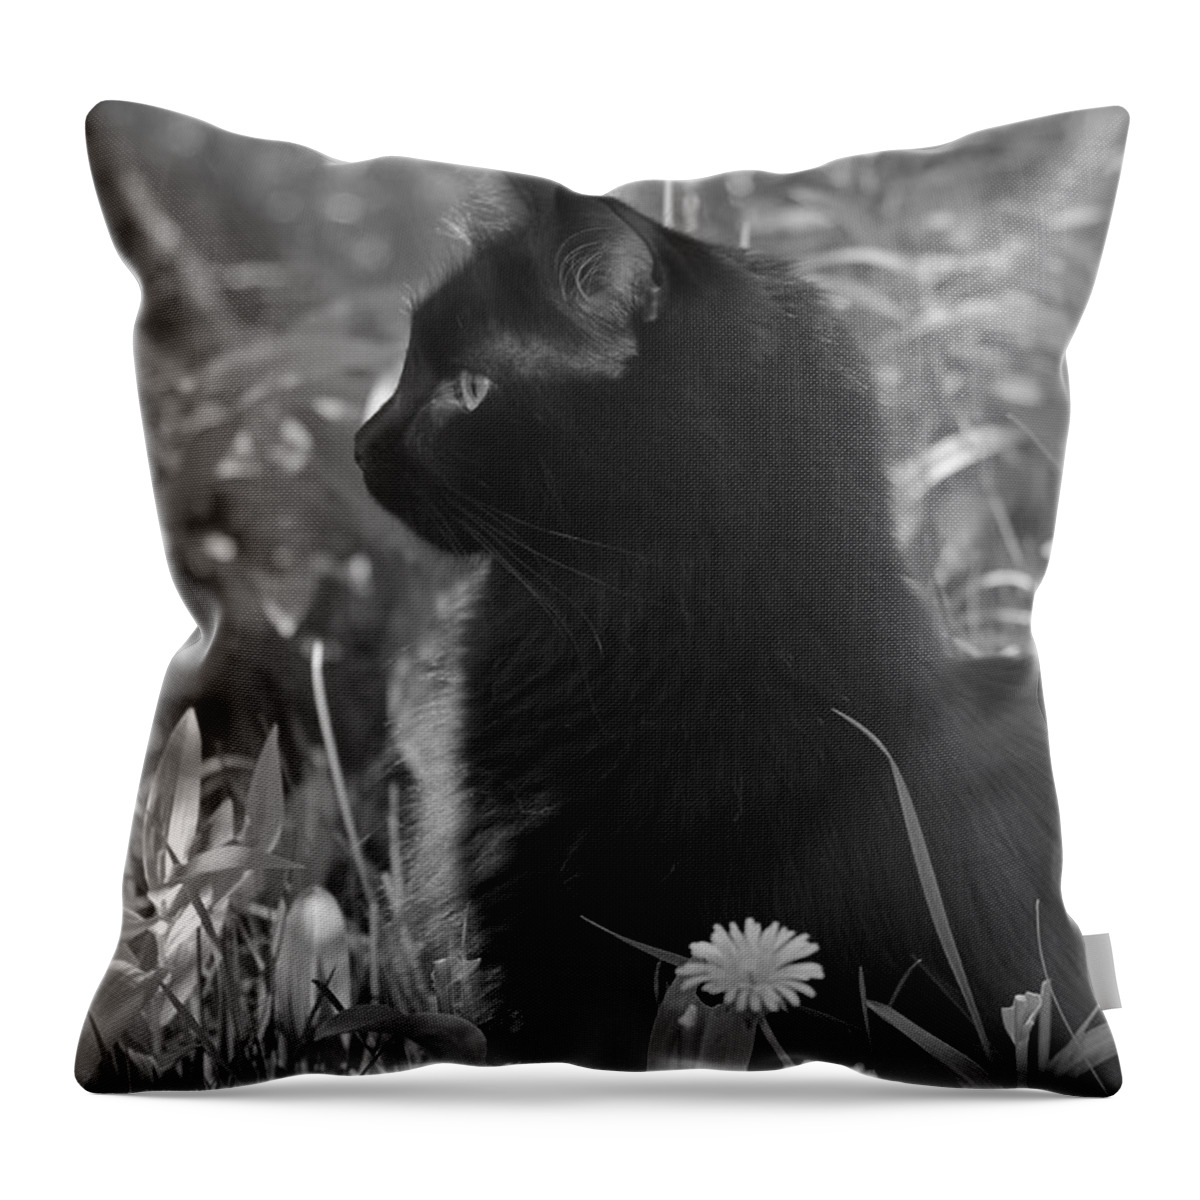 Cat Throw Pillow featuring the photograph Bird Watching by Karon Melillo DeVega